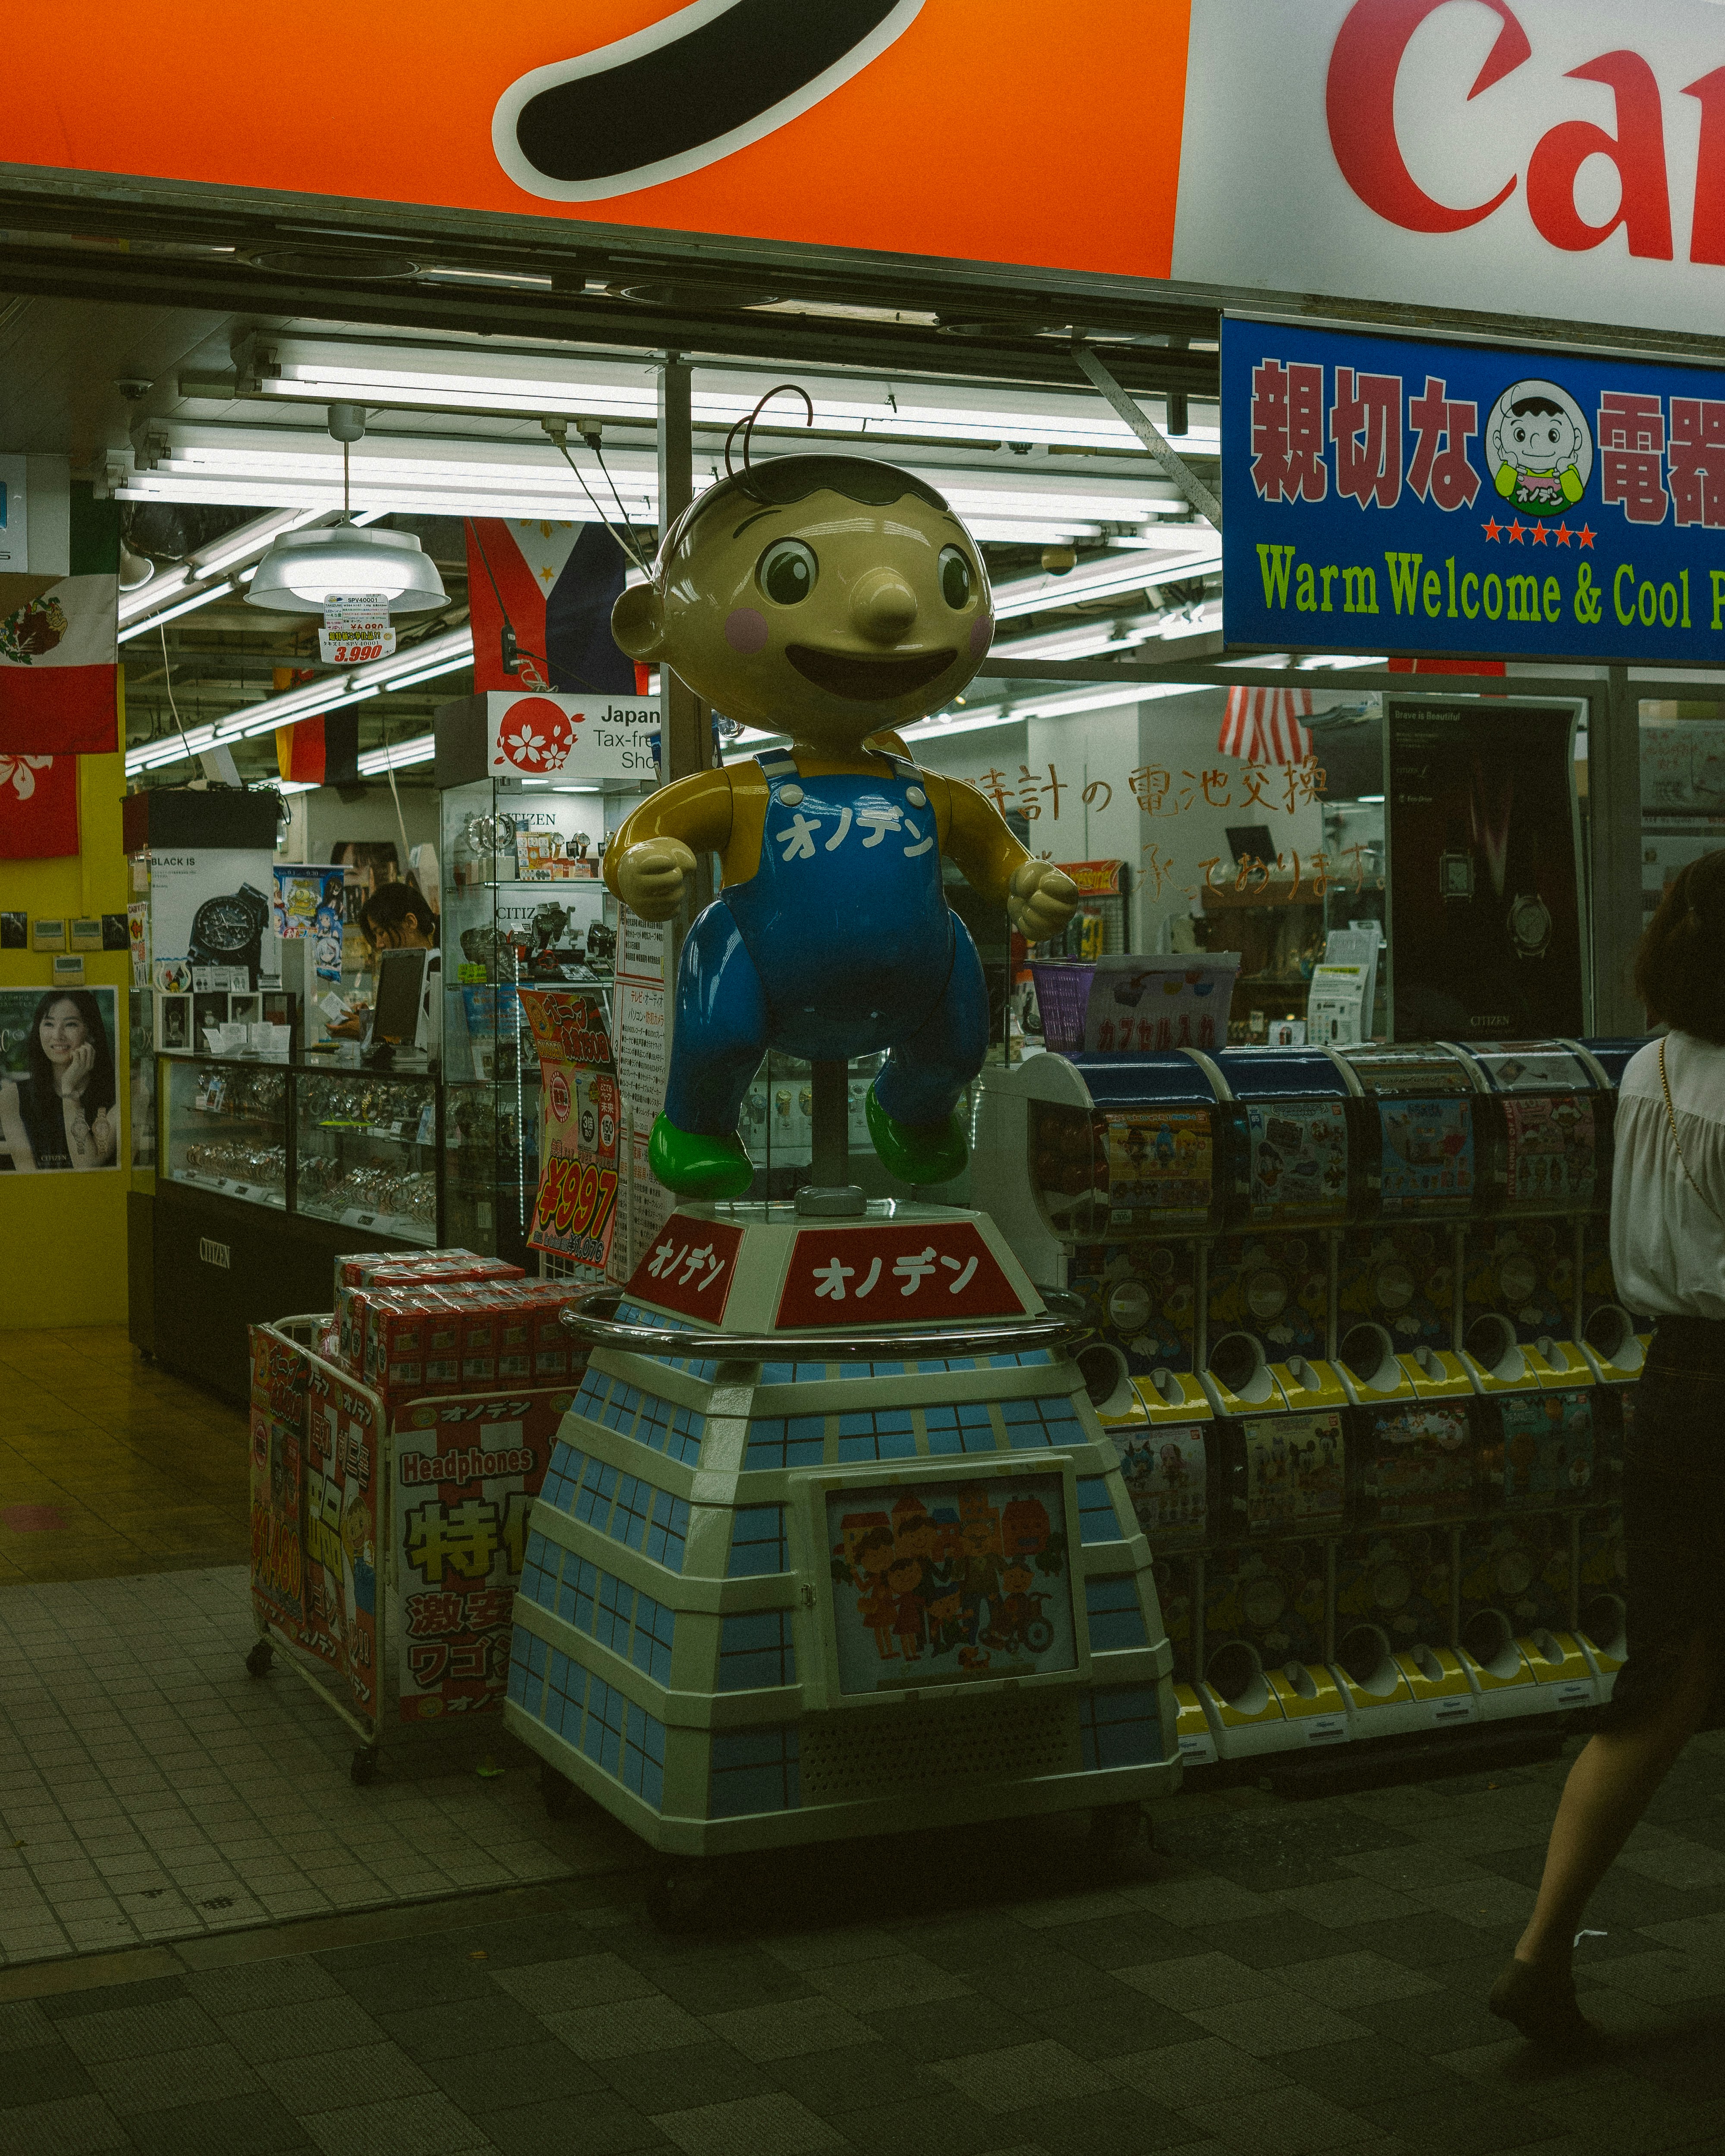 Tax free store in Akihabara, Tokyo, Japan.